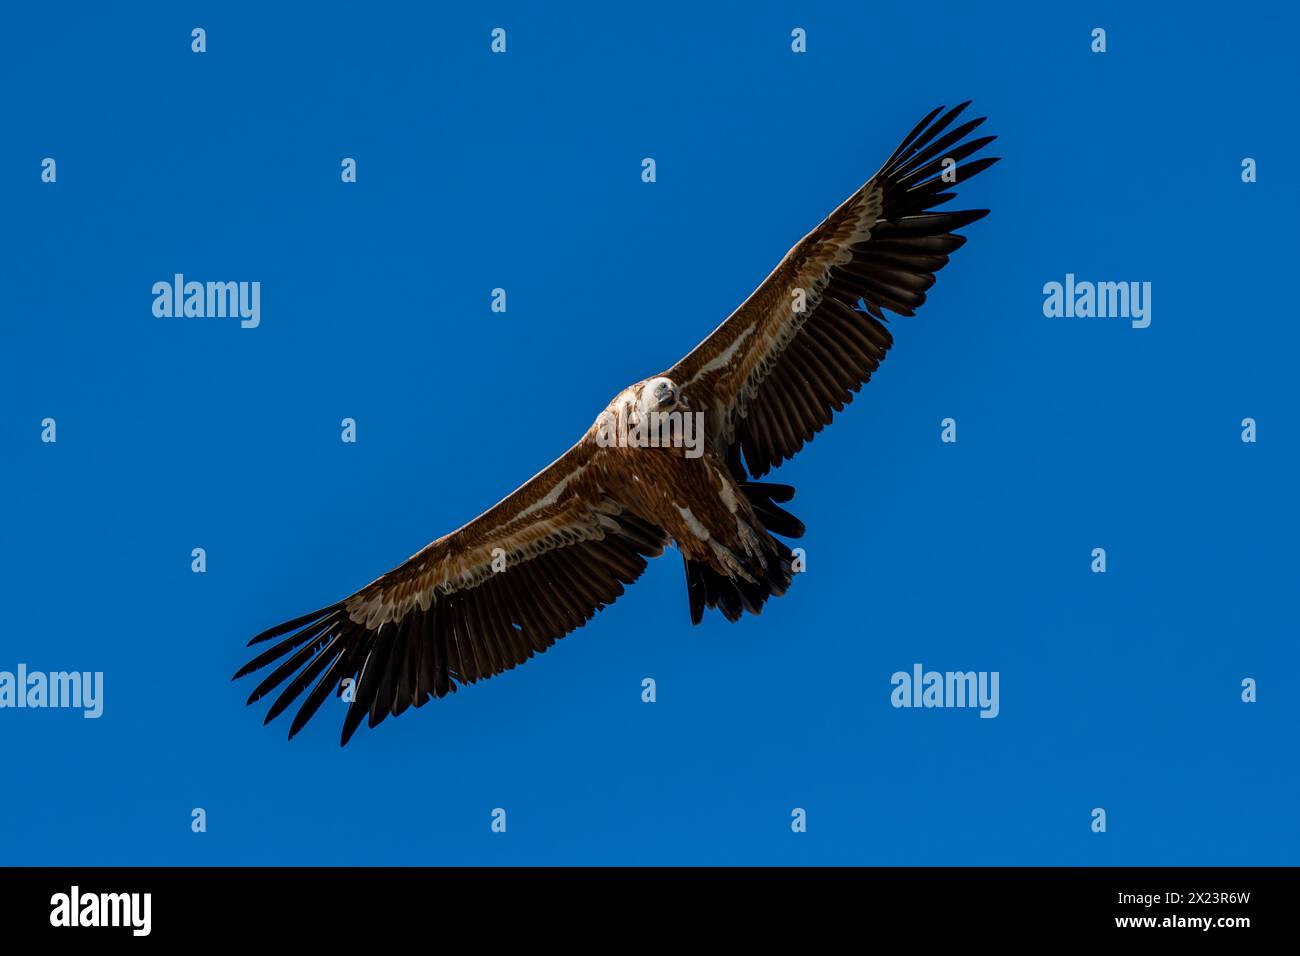 Eurasian griffon vulture, Parque Nacional de Monfragüe, Spain Stock Photo